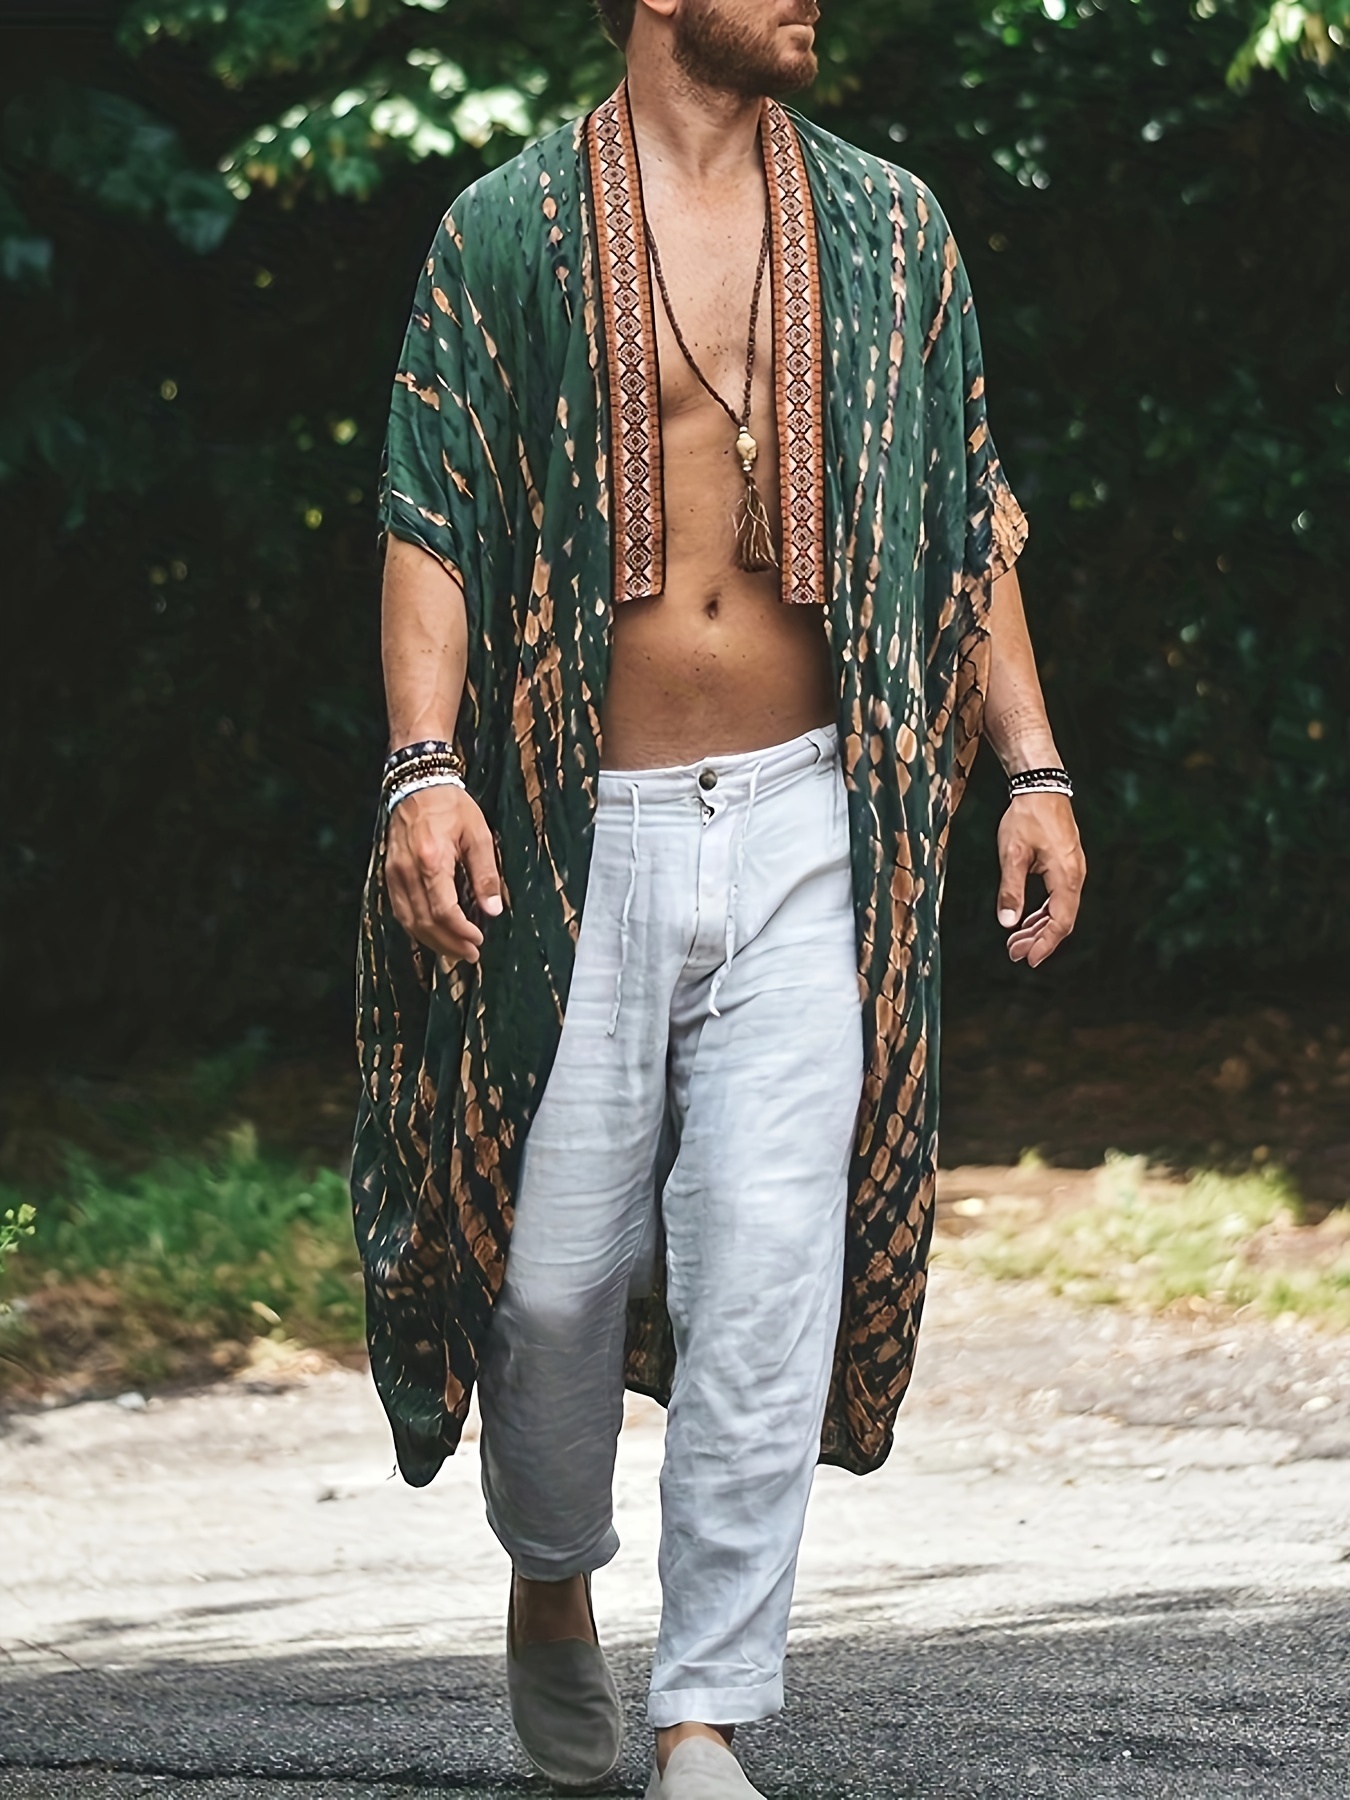 Men's Bohemian Fashion for Summer {Men's boho bohemian hippie